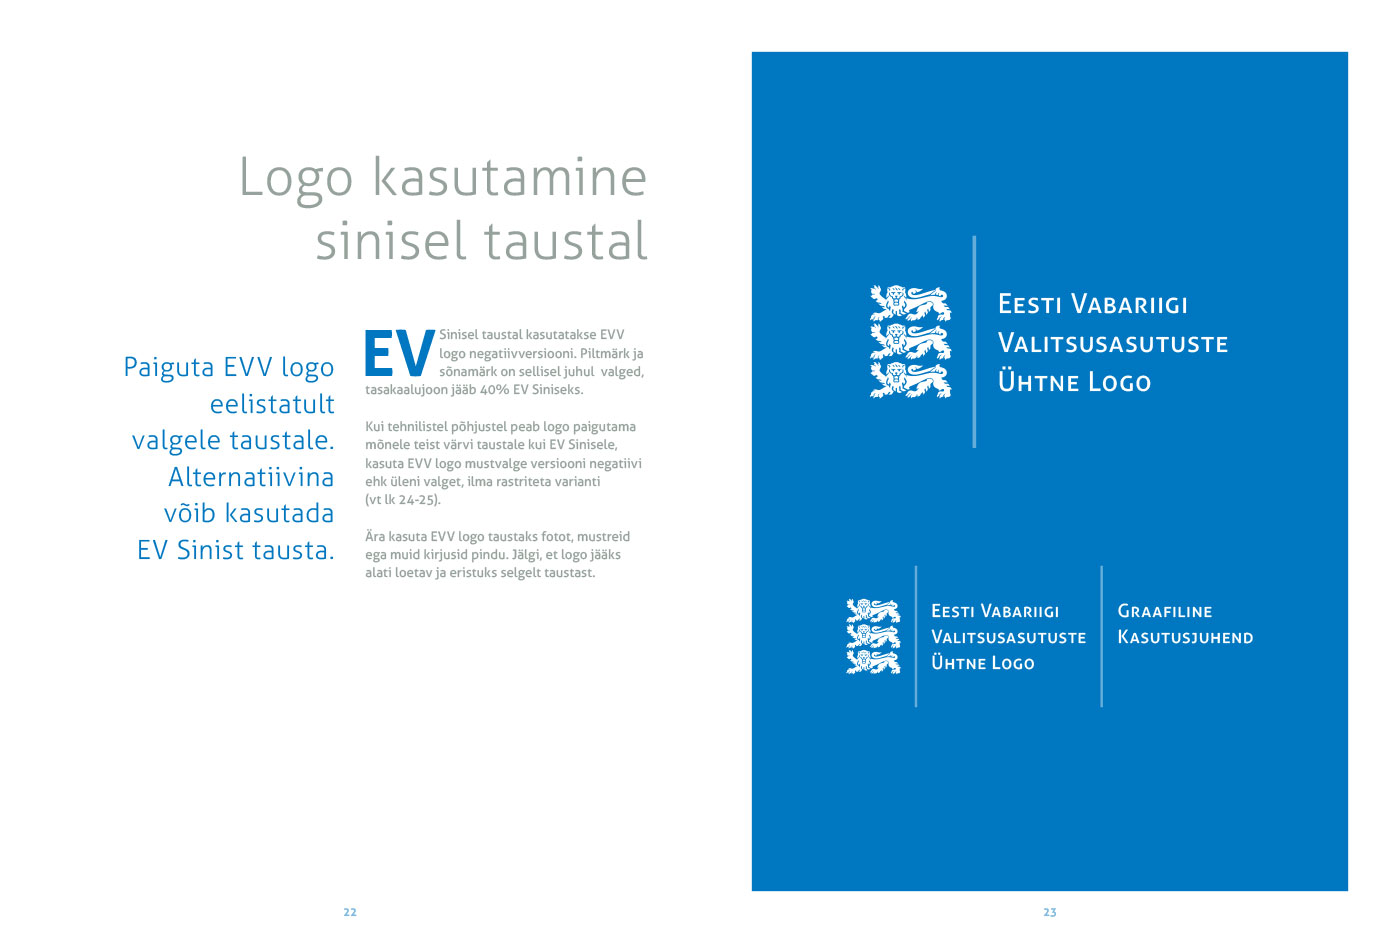 Eesti Vabariigi logo